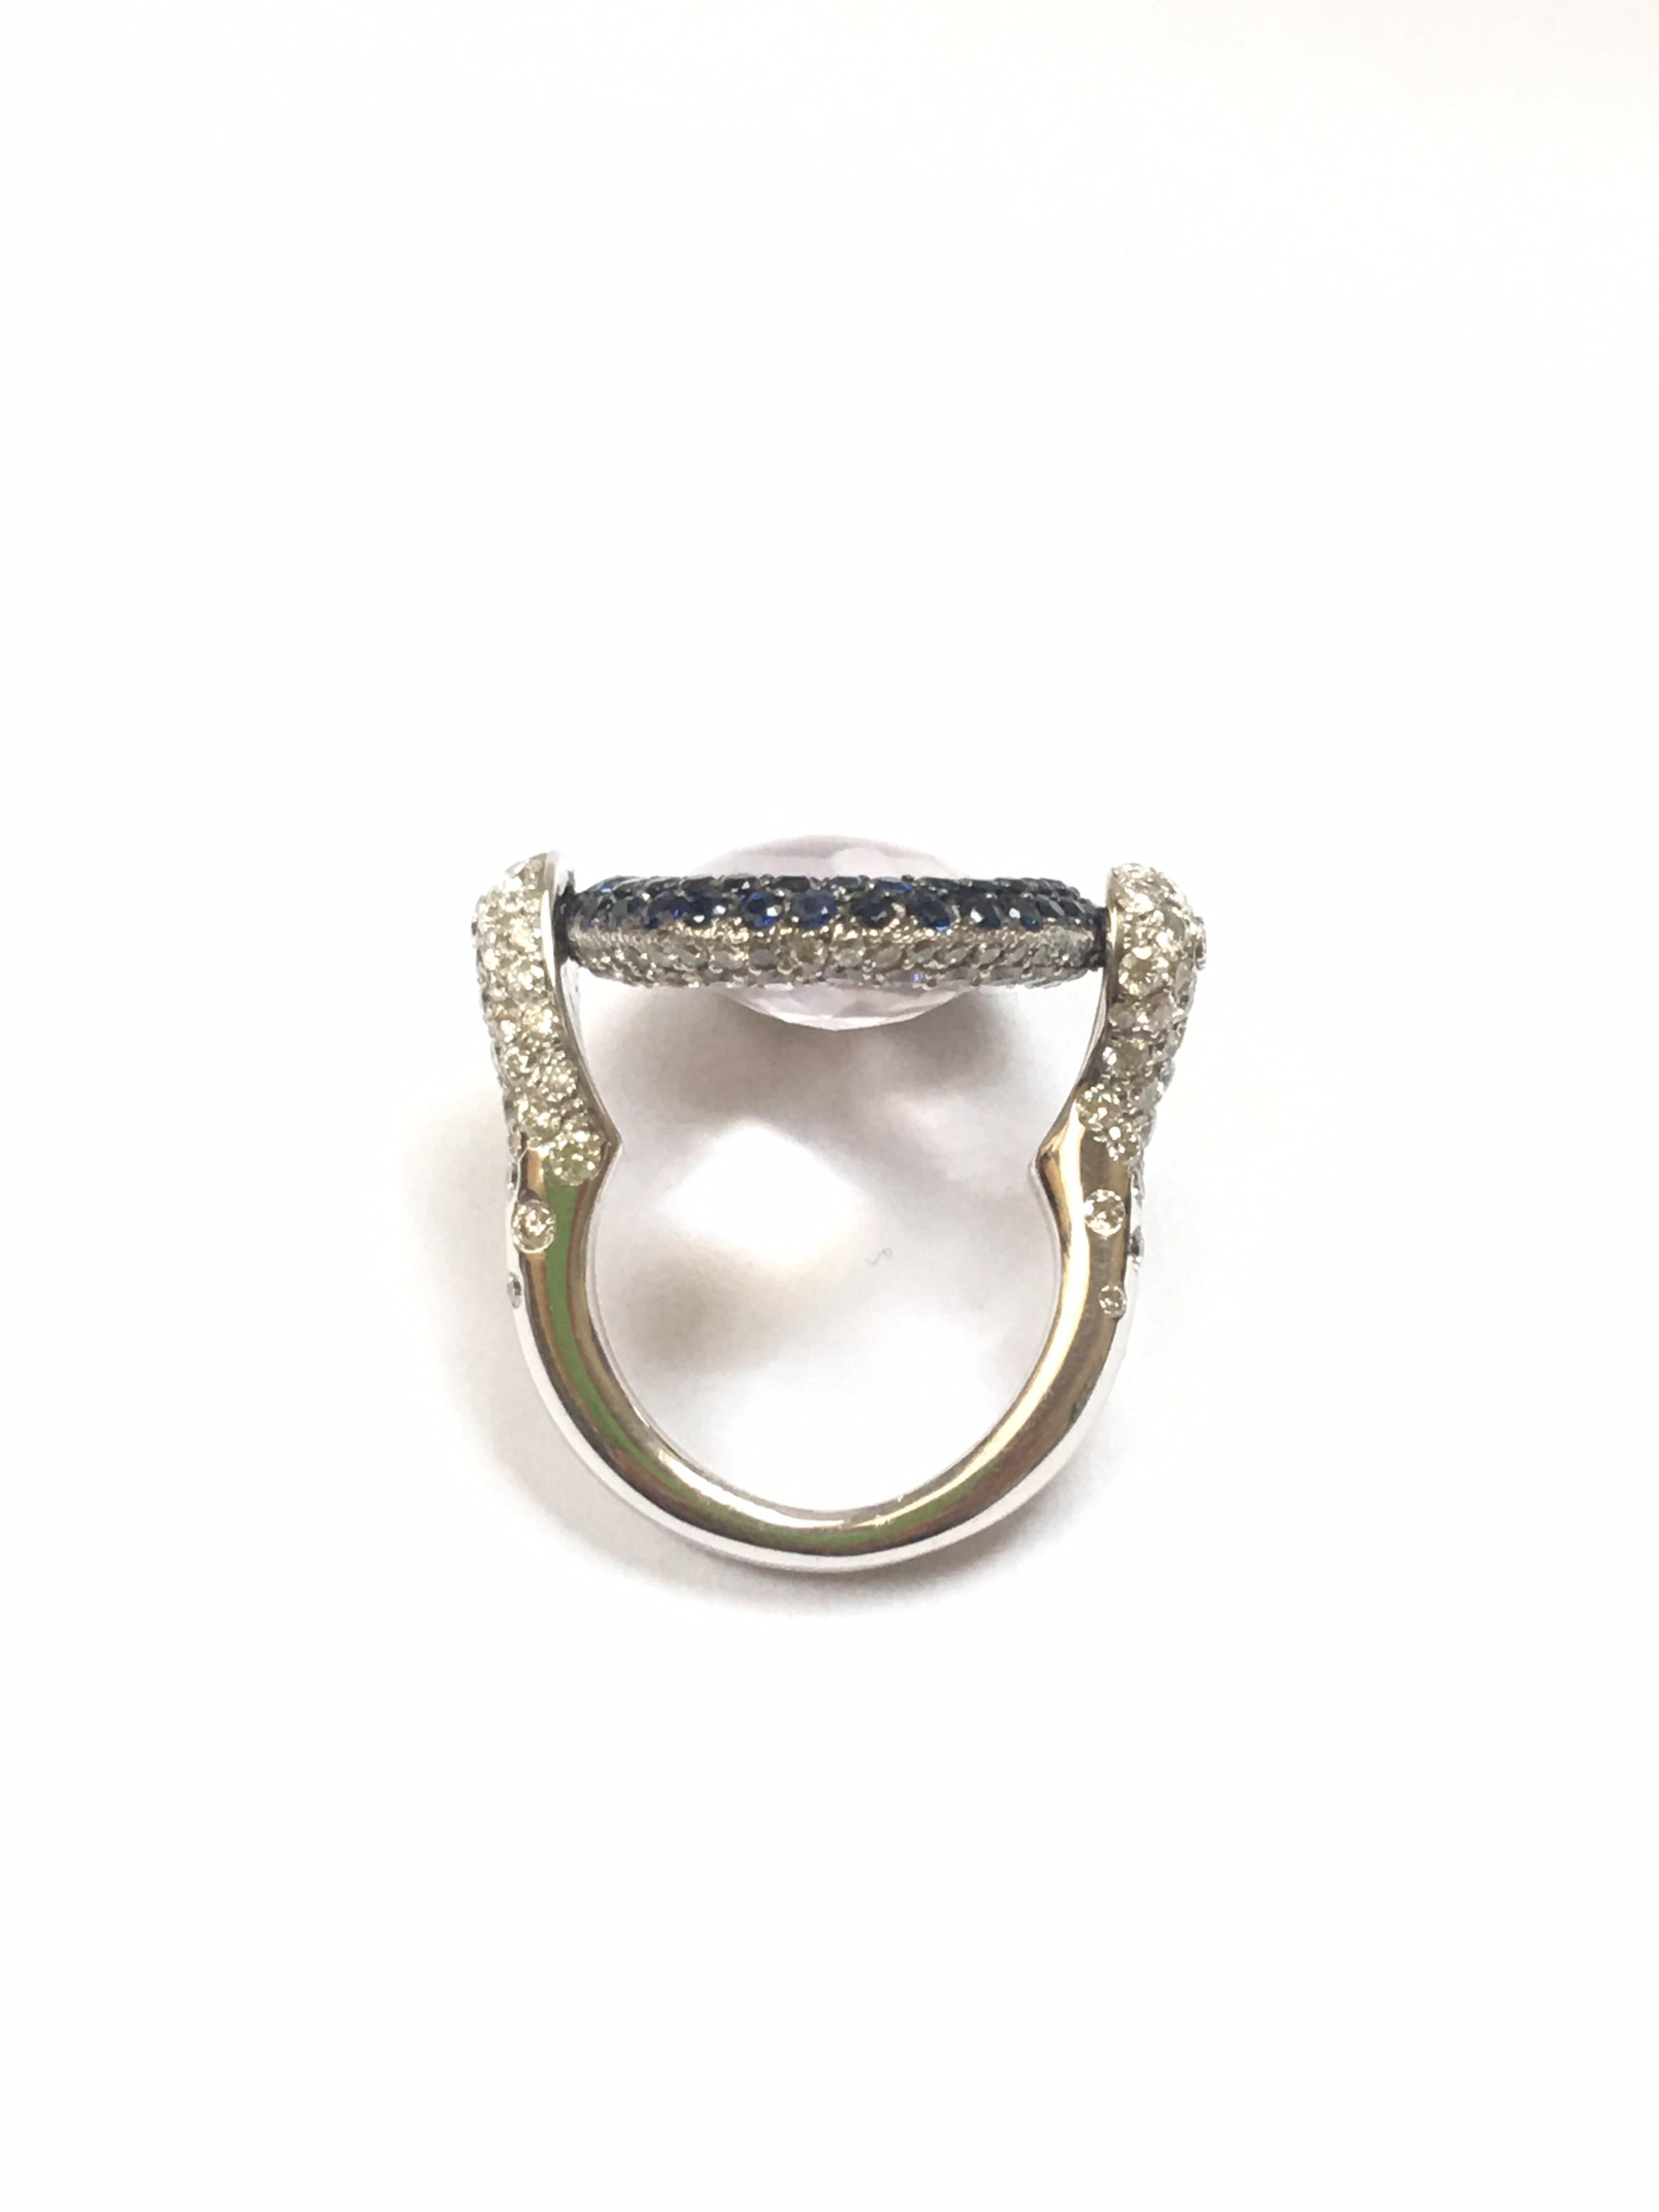 Women's Diamond Sapphire Kunzite Rotating Ring de Grisogono 18 Karat White Gold